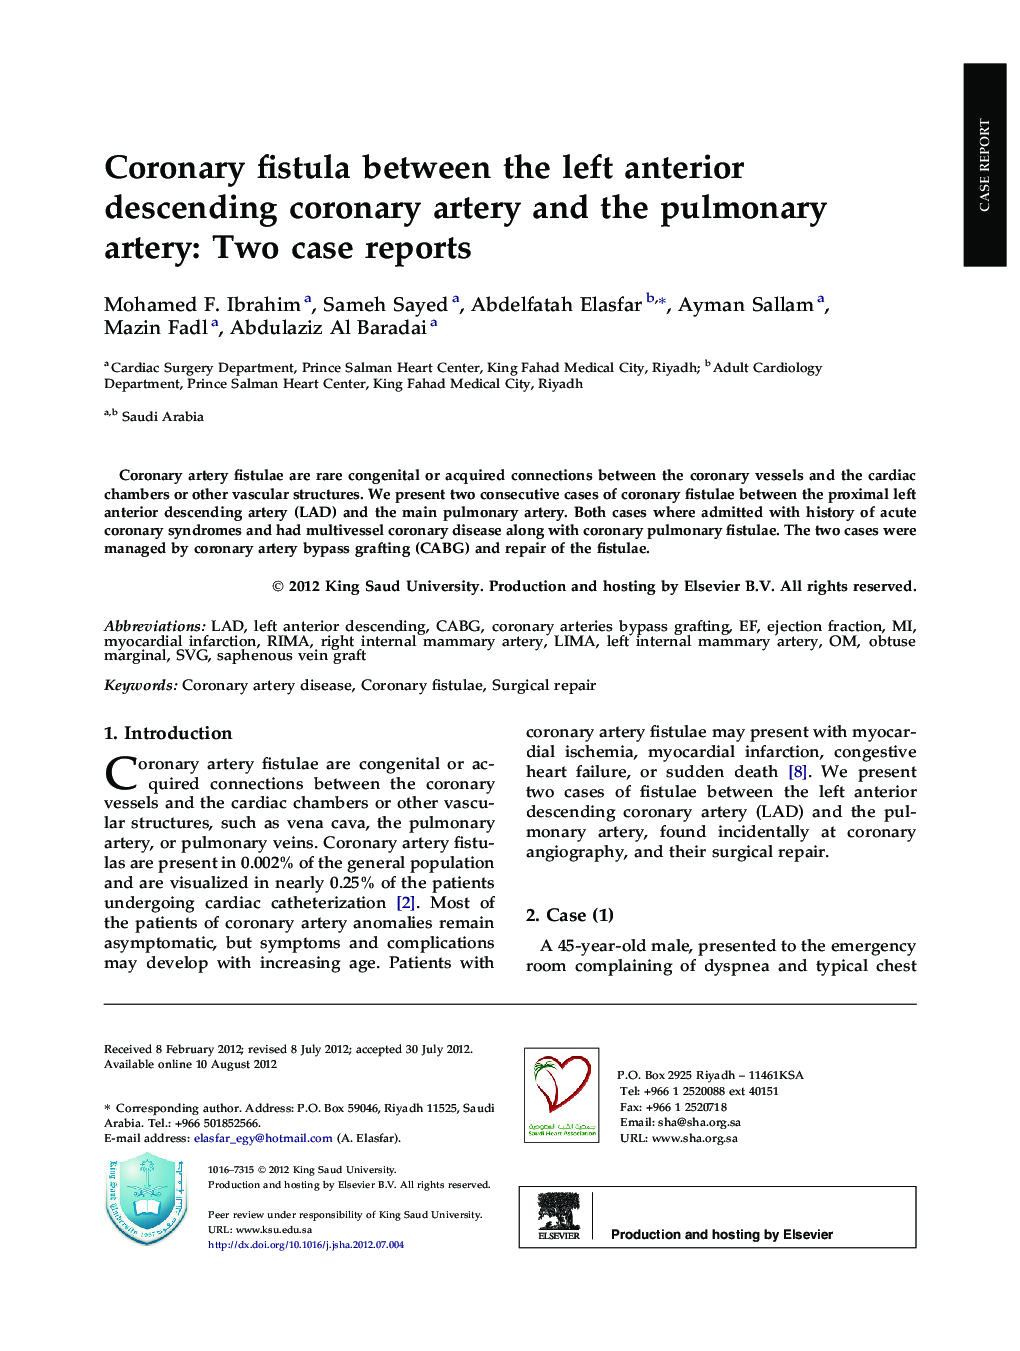 Coronary fistula between the left anterior descending coronary artery and the pulmonary artery: Two case reports 